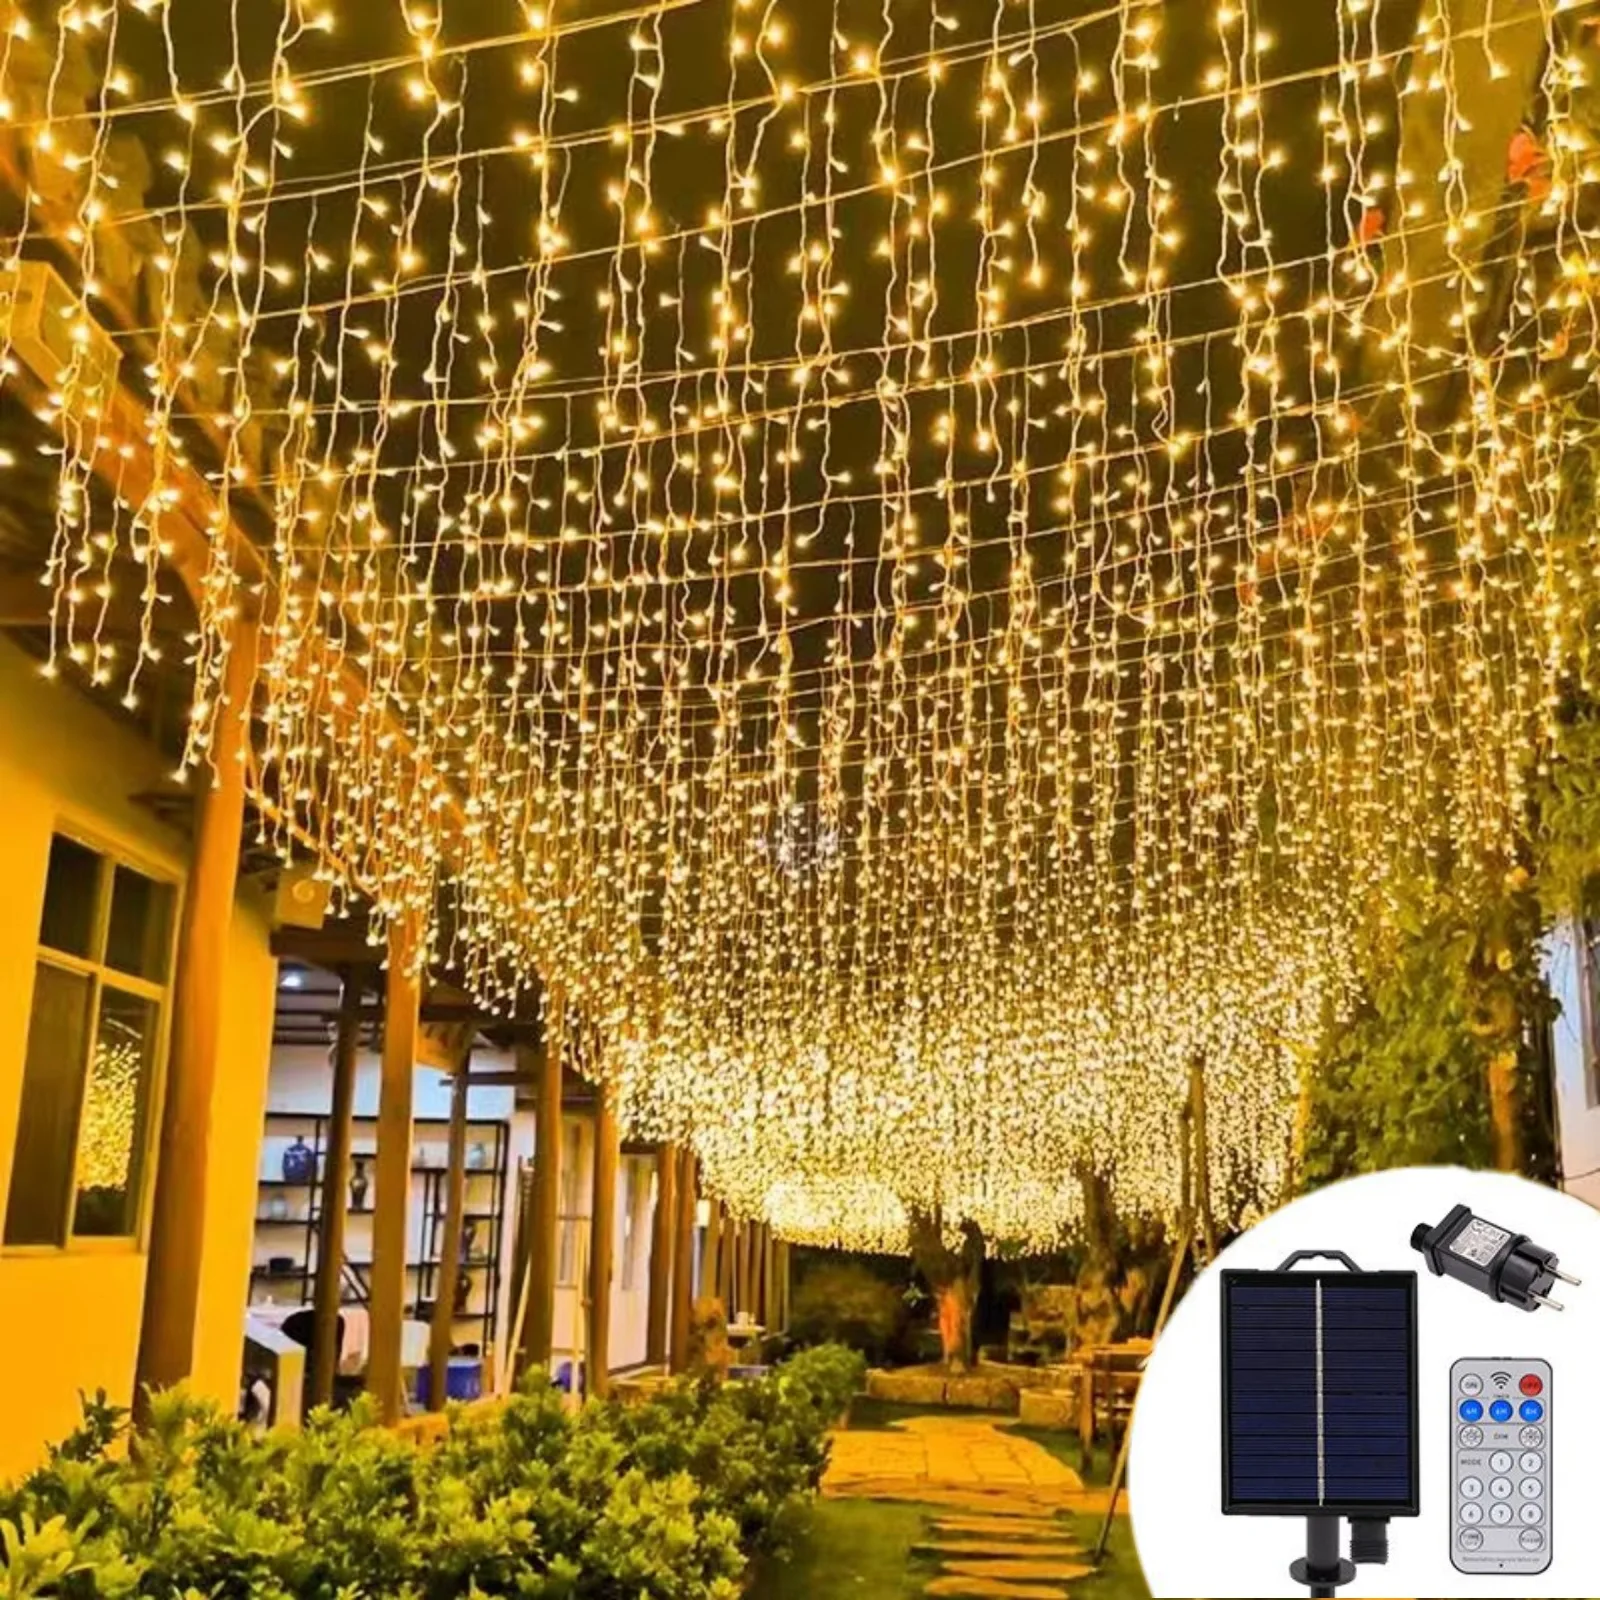 6x3M/3x3m Led Icicle Curtain Light String Garland Fairy Lights Patio Garden Decor Christmas Lights Outdoor Wedding Navidad GL48